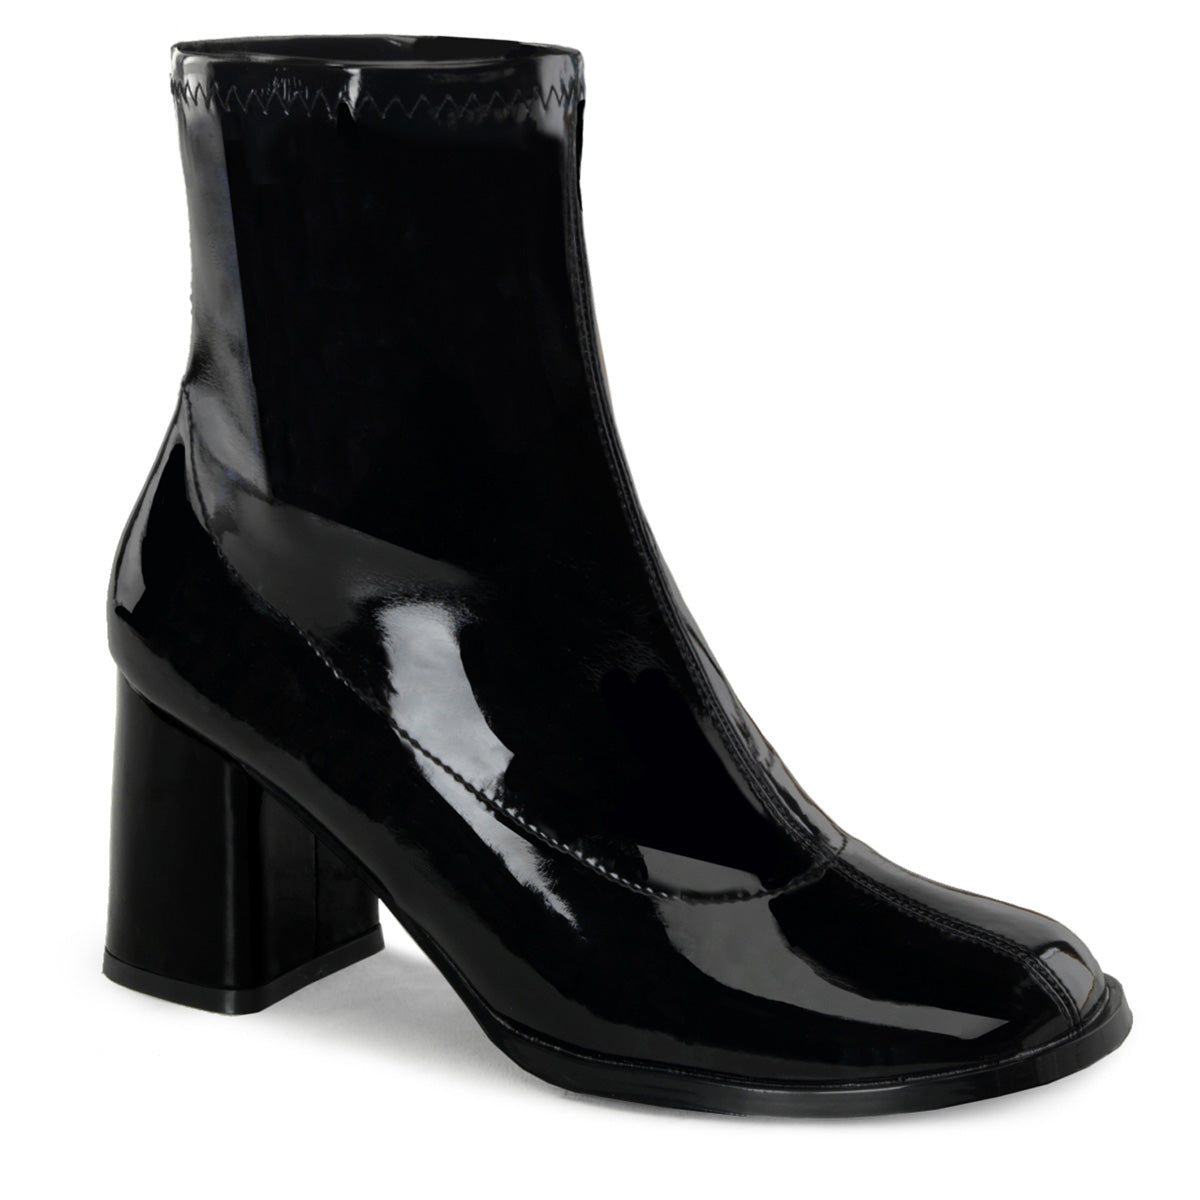 GOGO-150 3" Heel Black Stretch Women's Boots Funtasma Costume Shoes